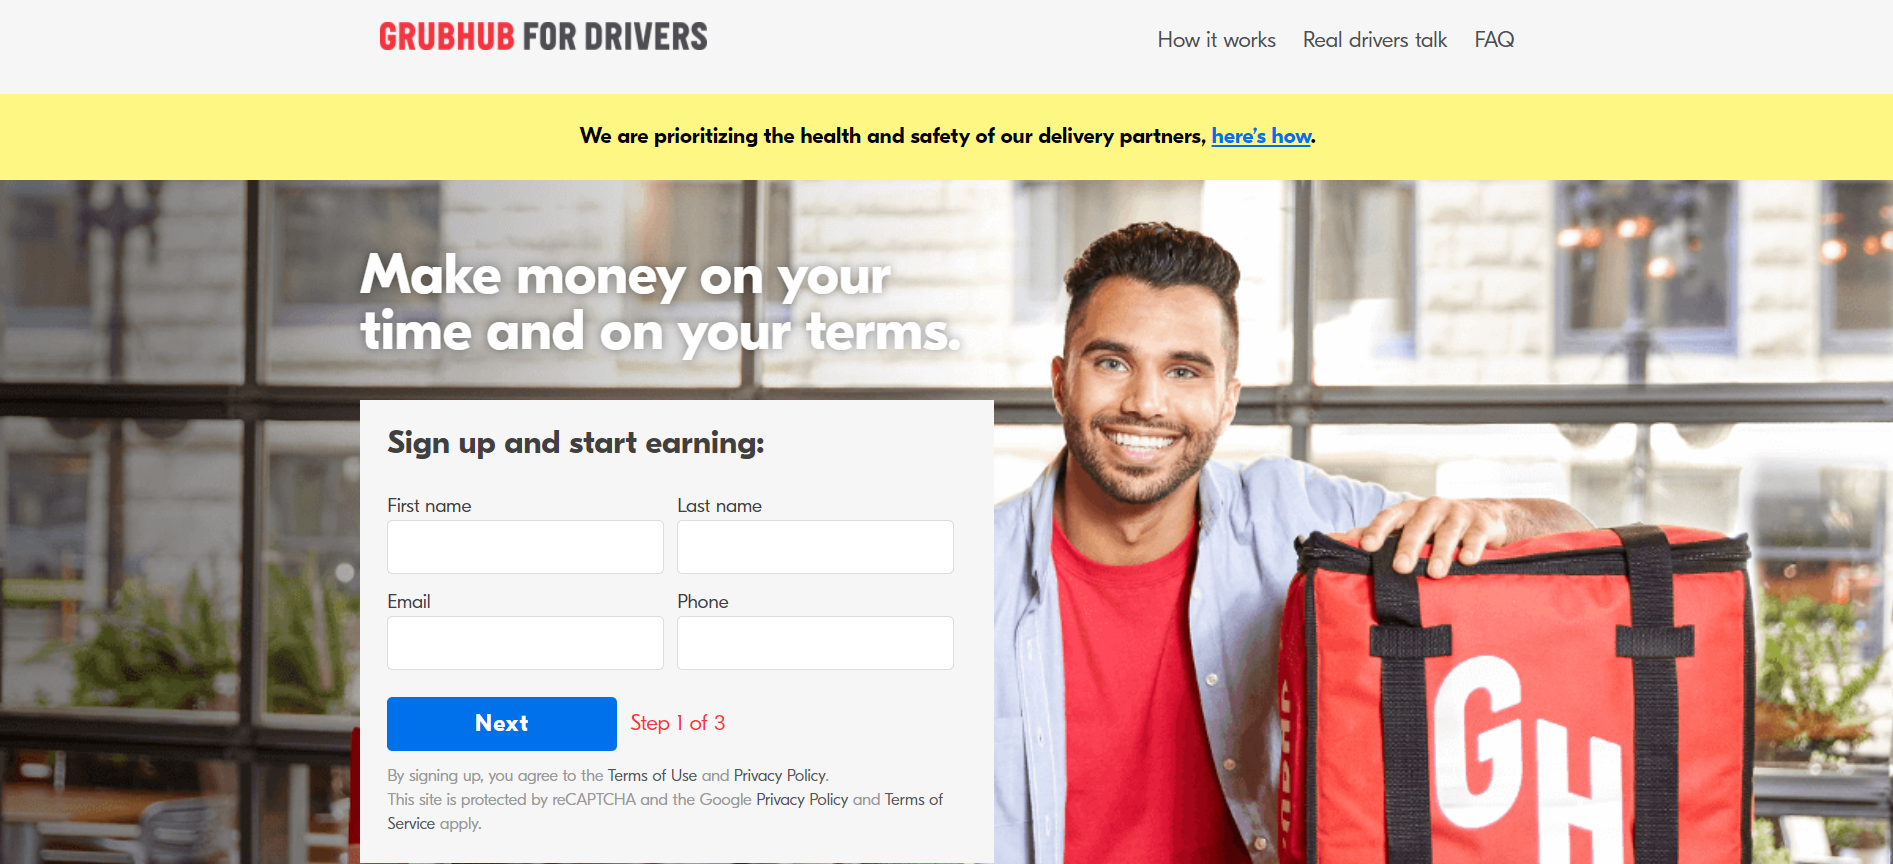 GrubHub For Drivers homepage